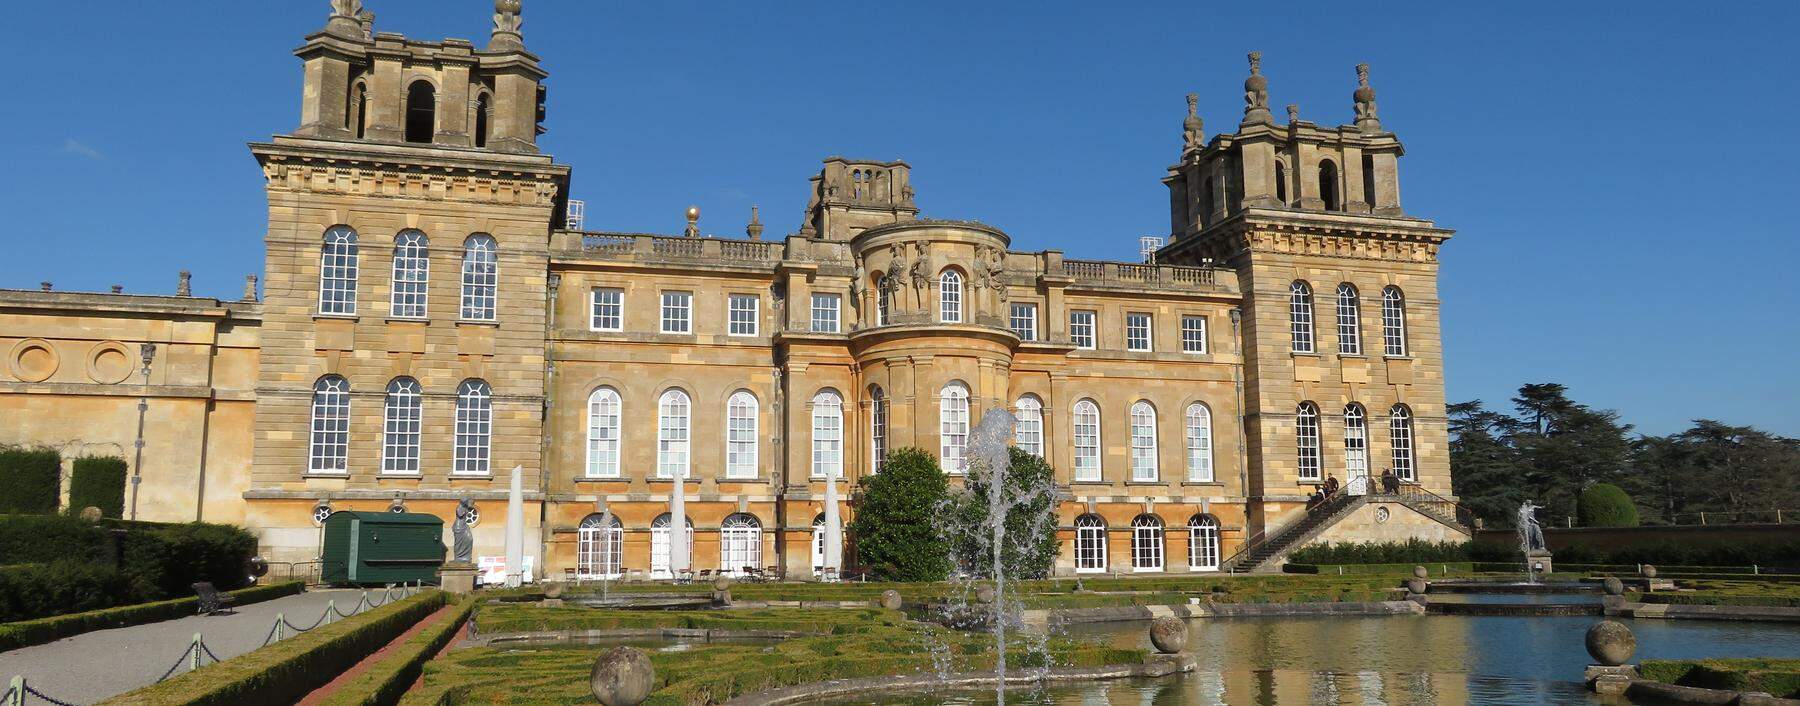 Blenheim Palace liegt in der Grafschaft Oxfordshire am Rand der idyllischen Cotswolds.